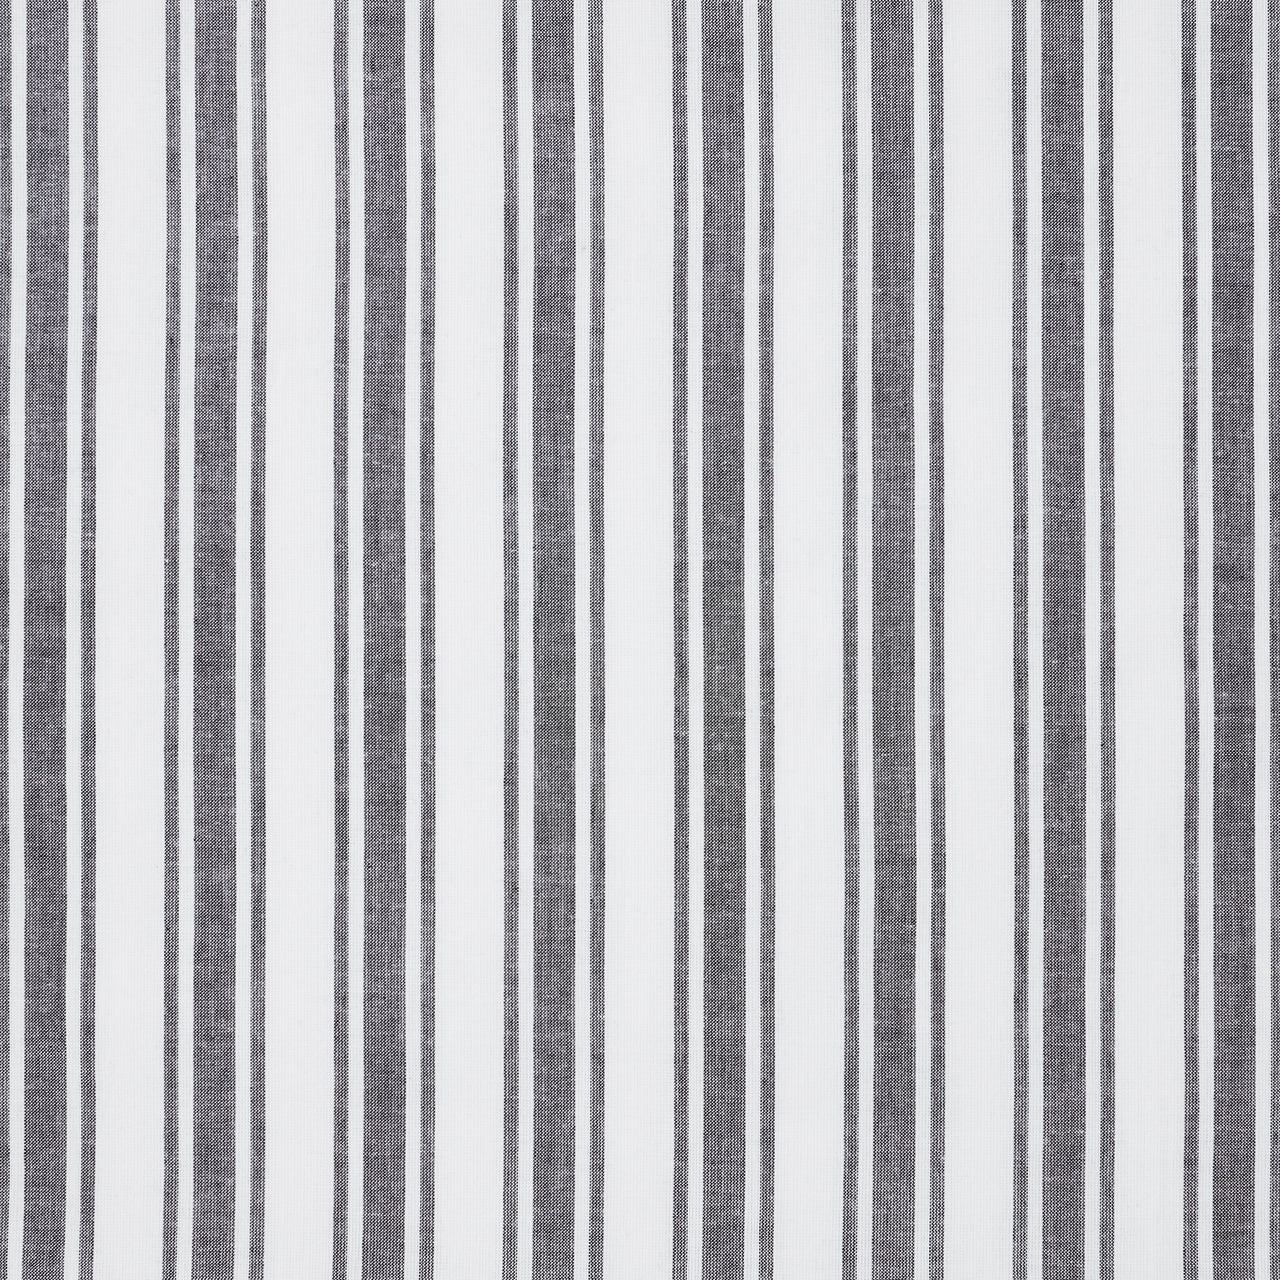 Sawyer Mill Black Ticking Stripe Tier Curtain Set of 2 L36xW36 VHC Brands